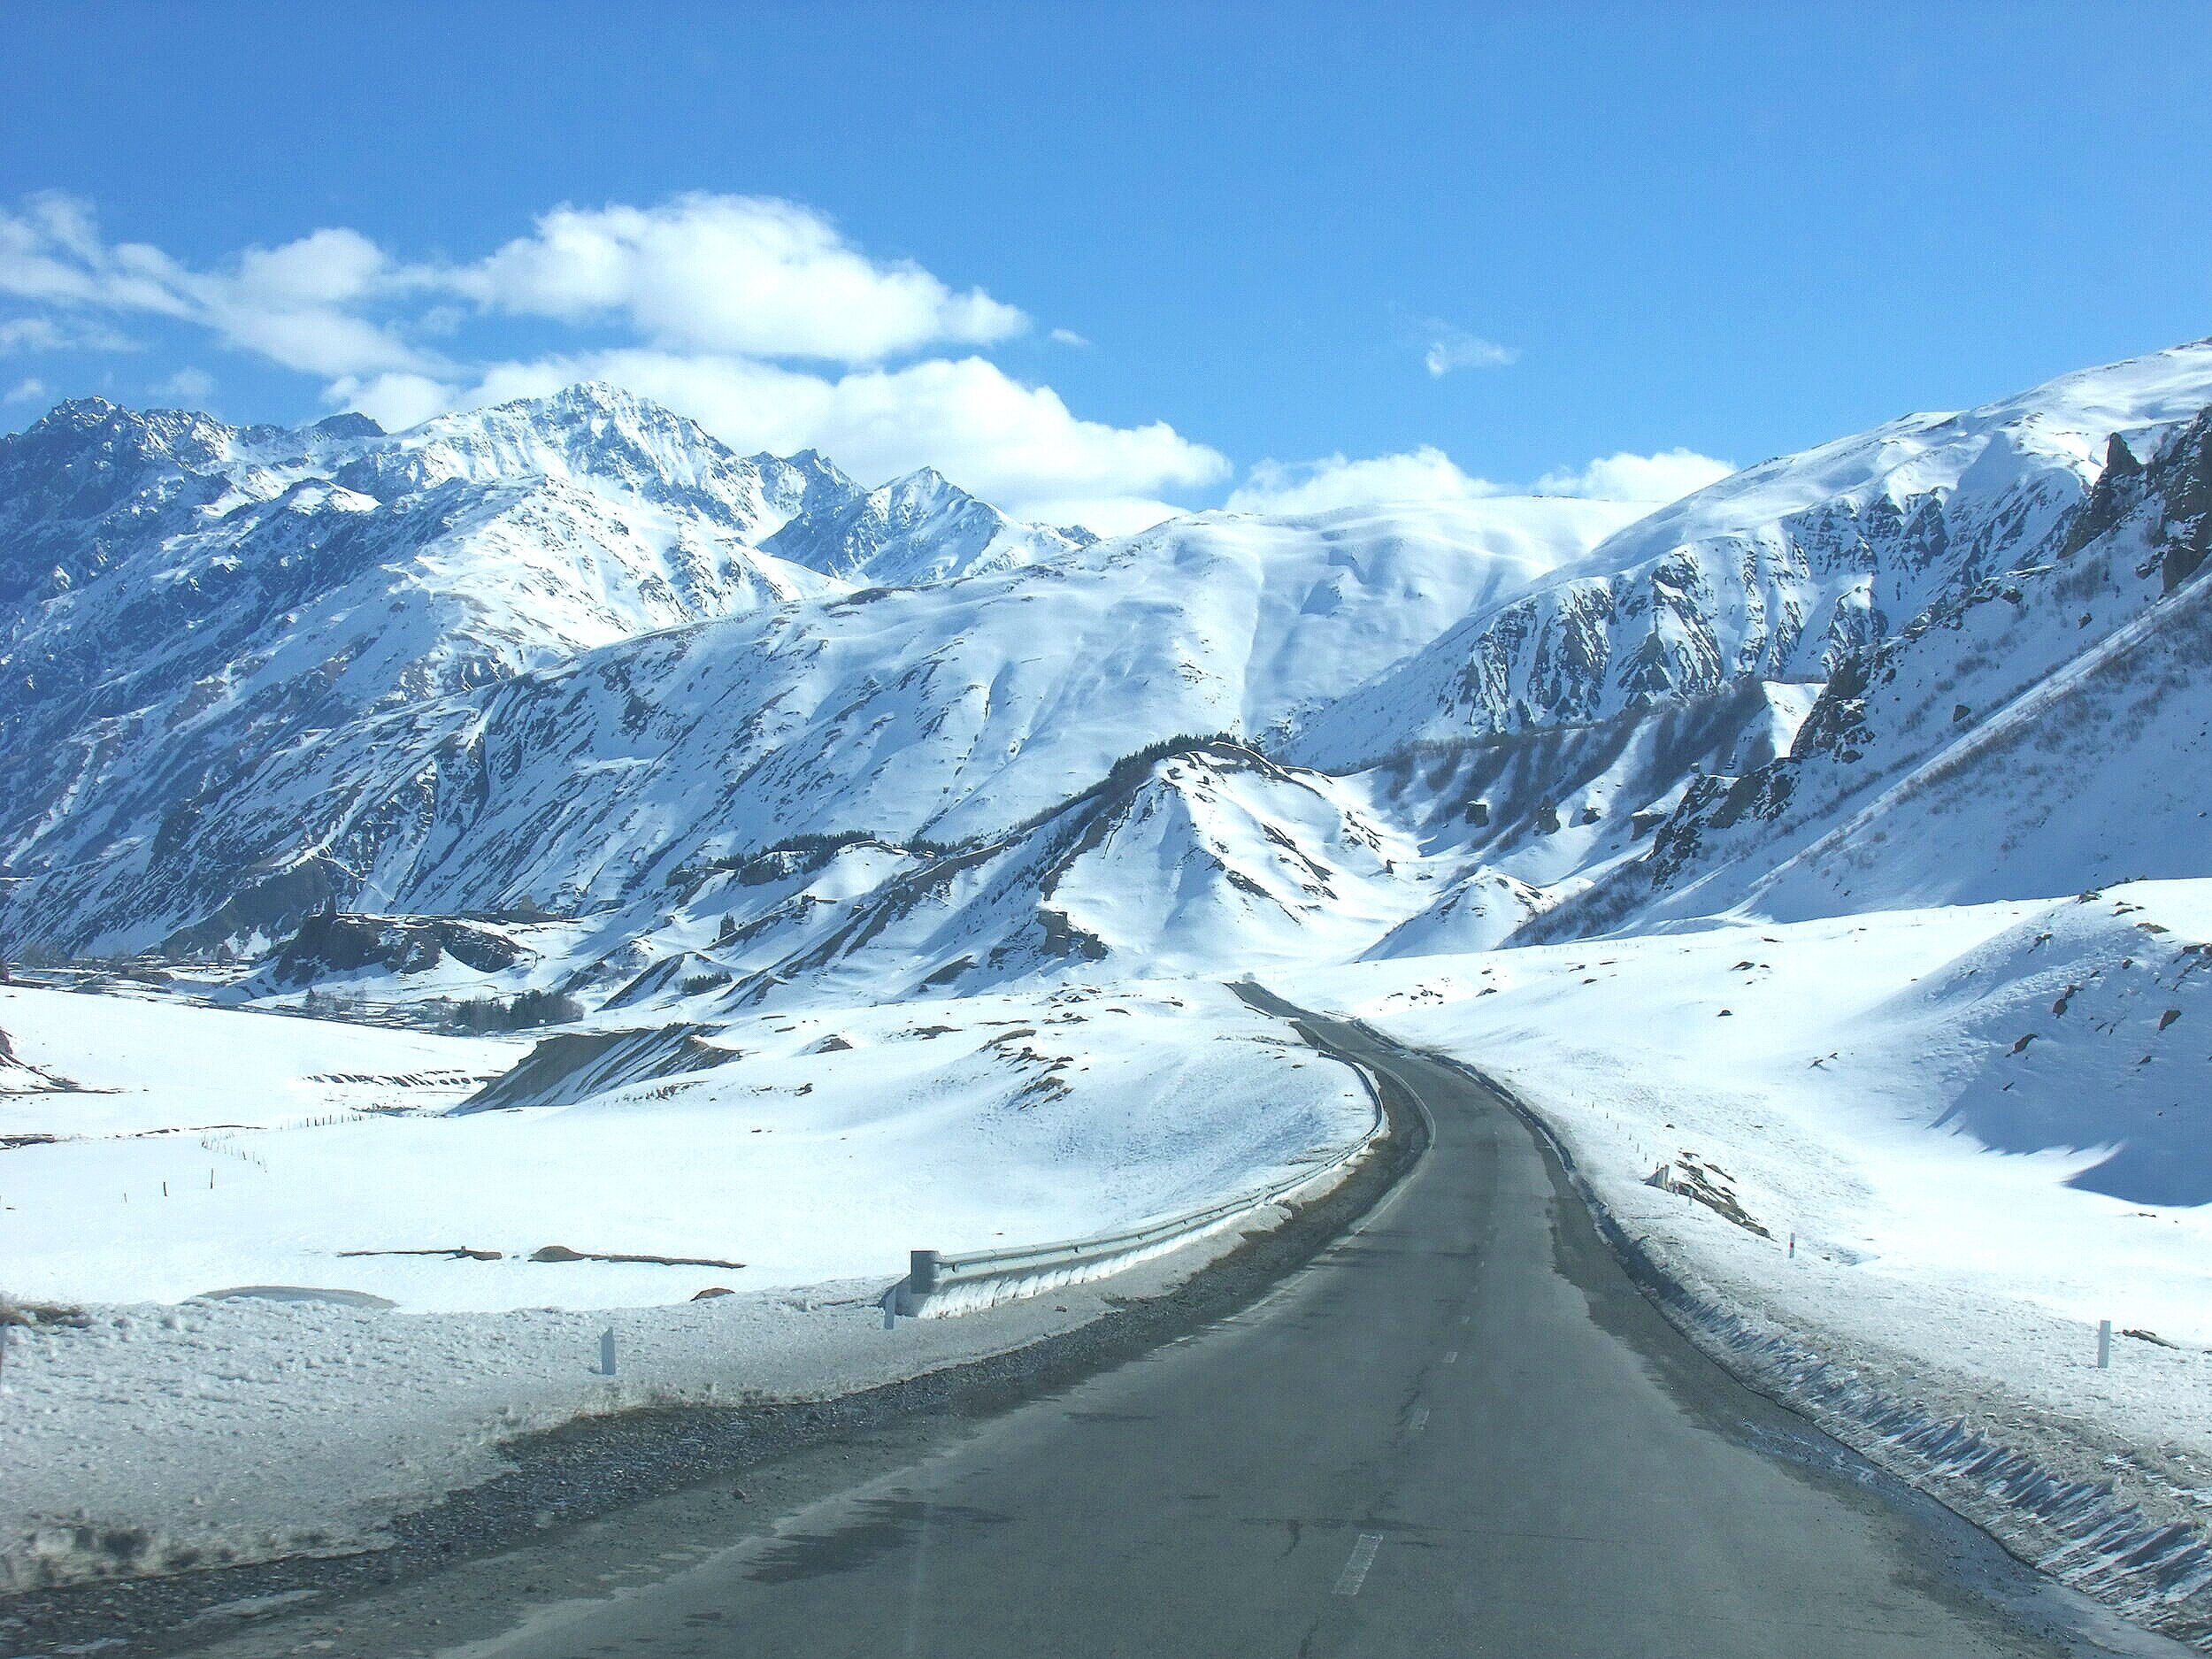 Scenic snowy road